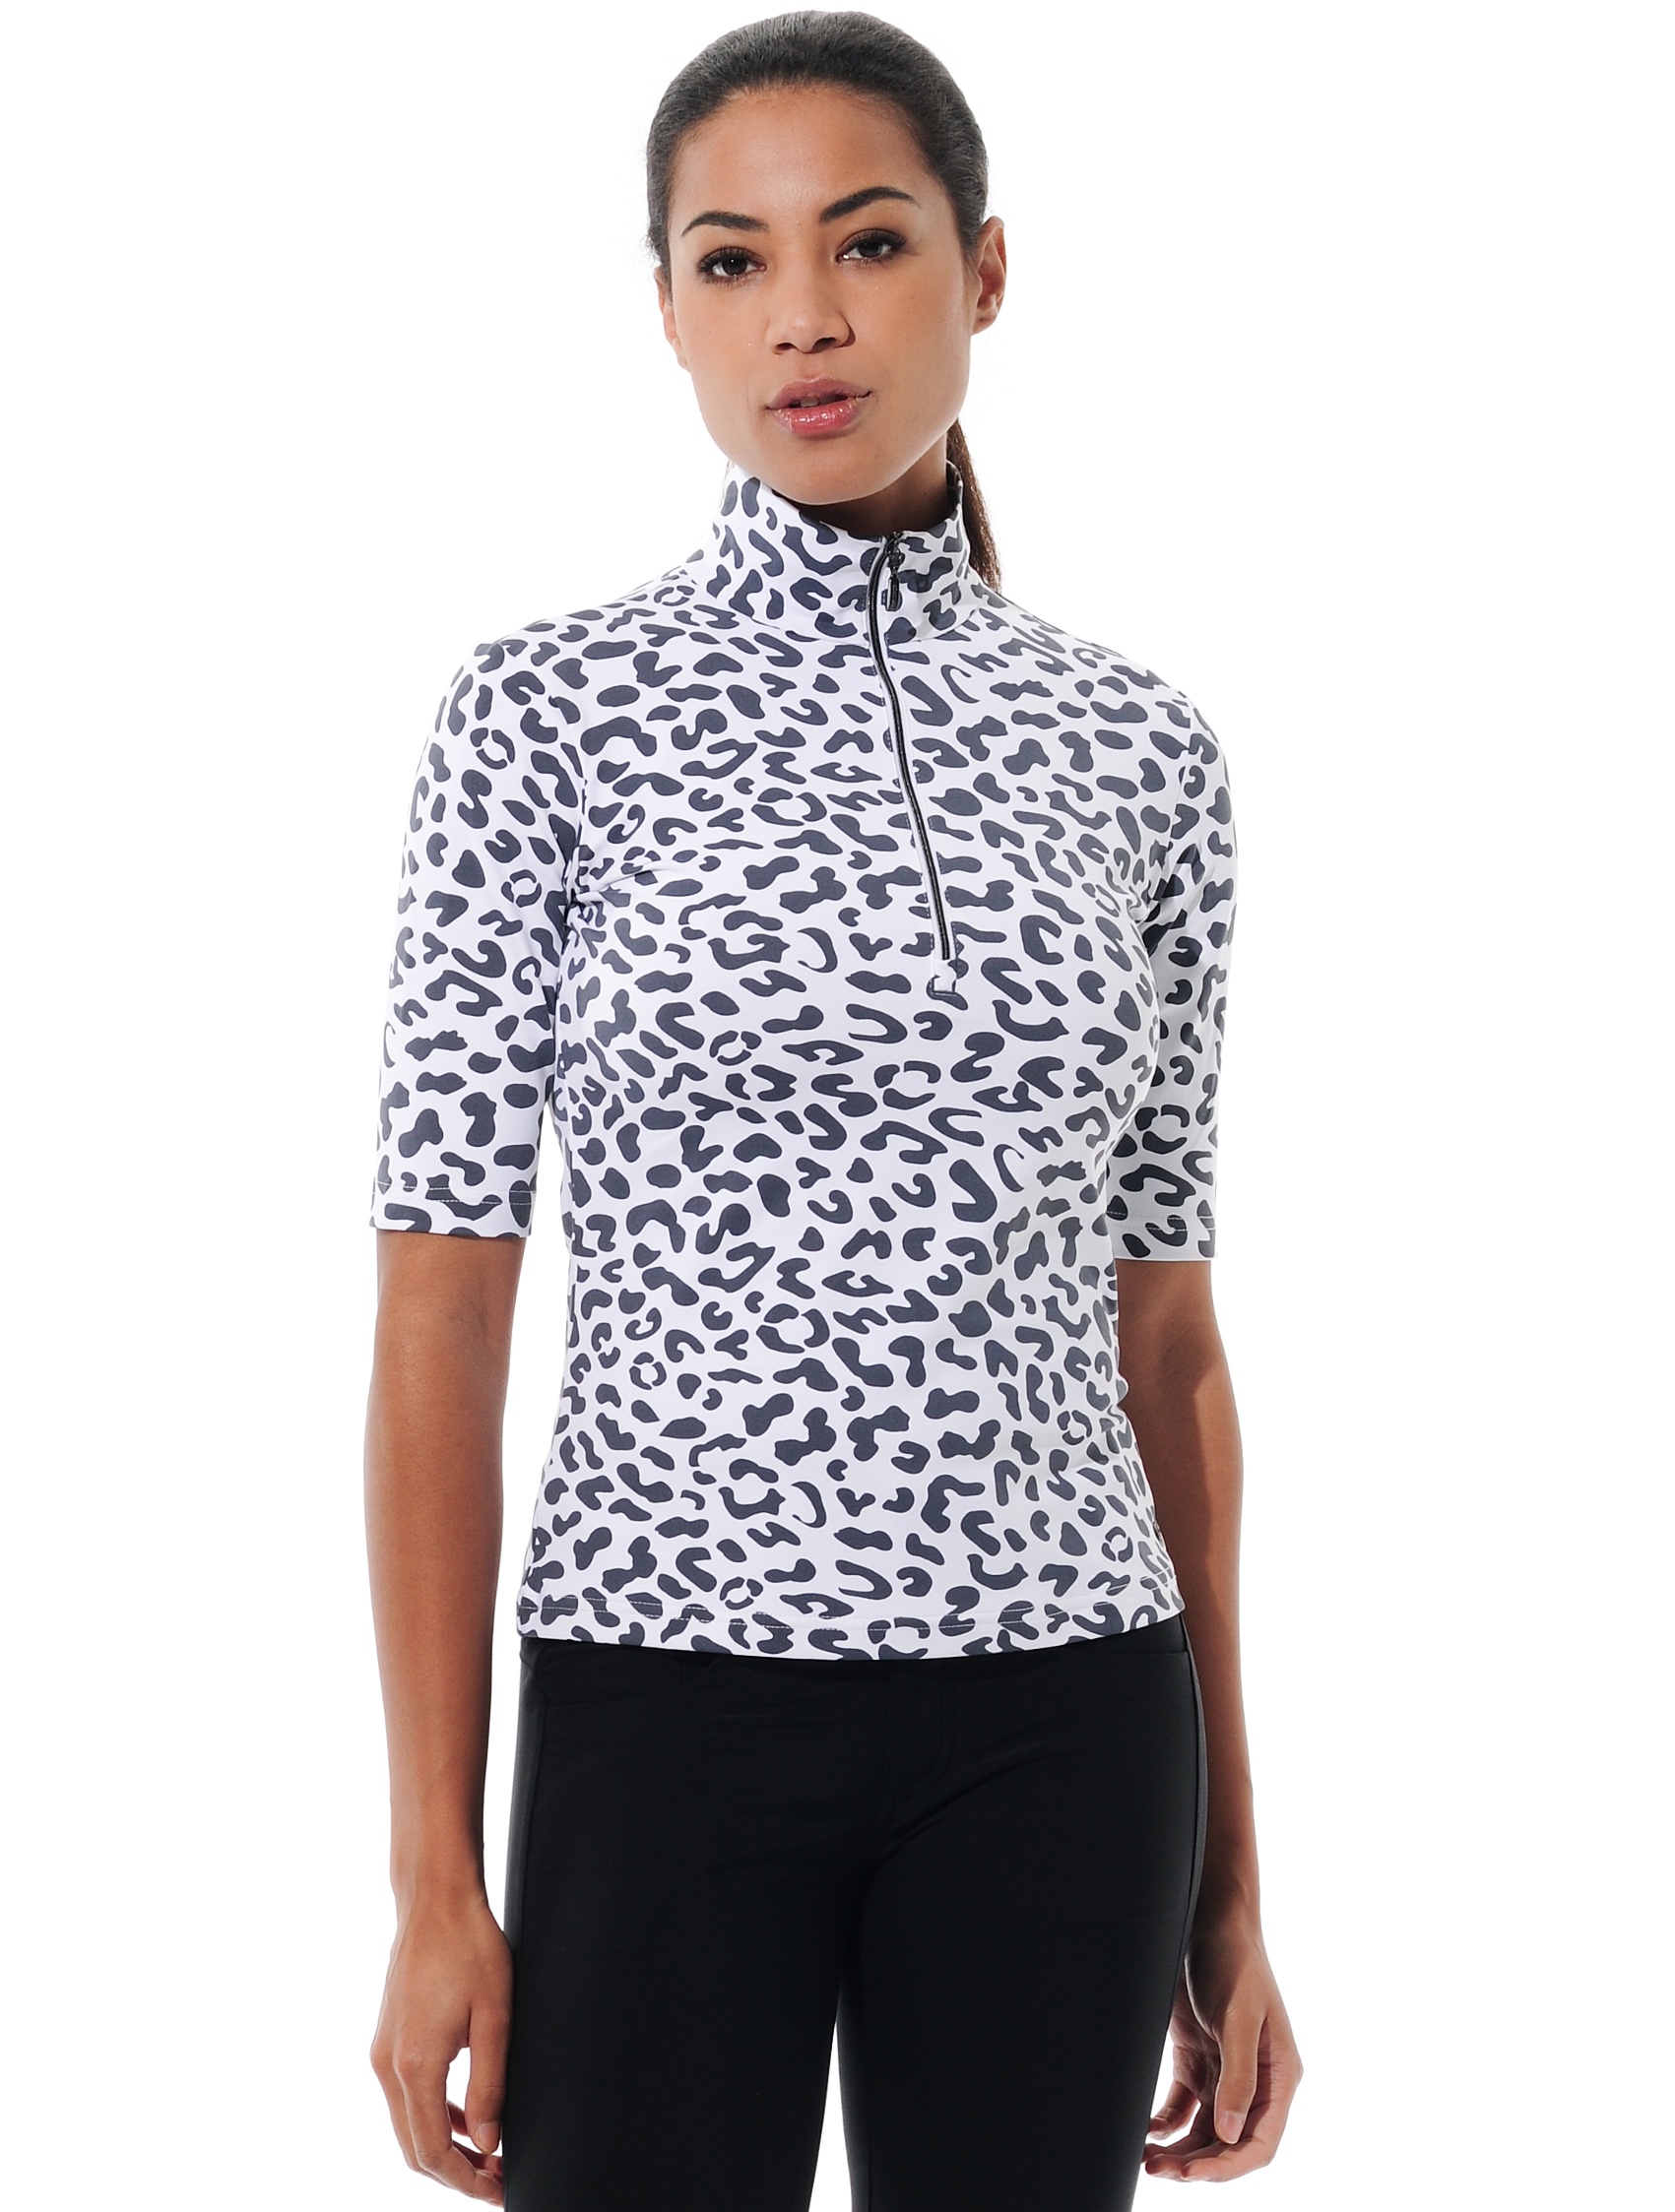 Jaguar print polo shirt black/white 